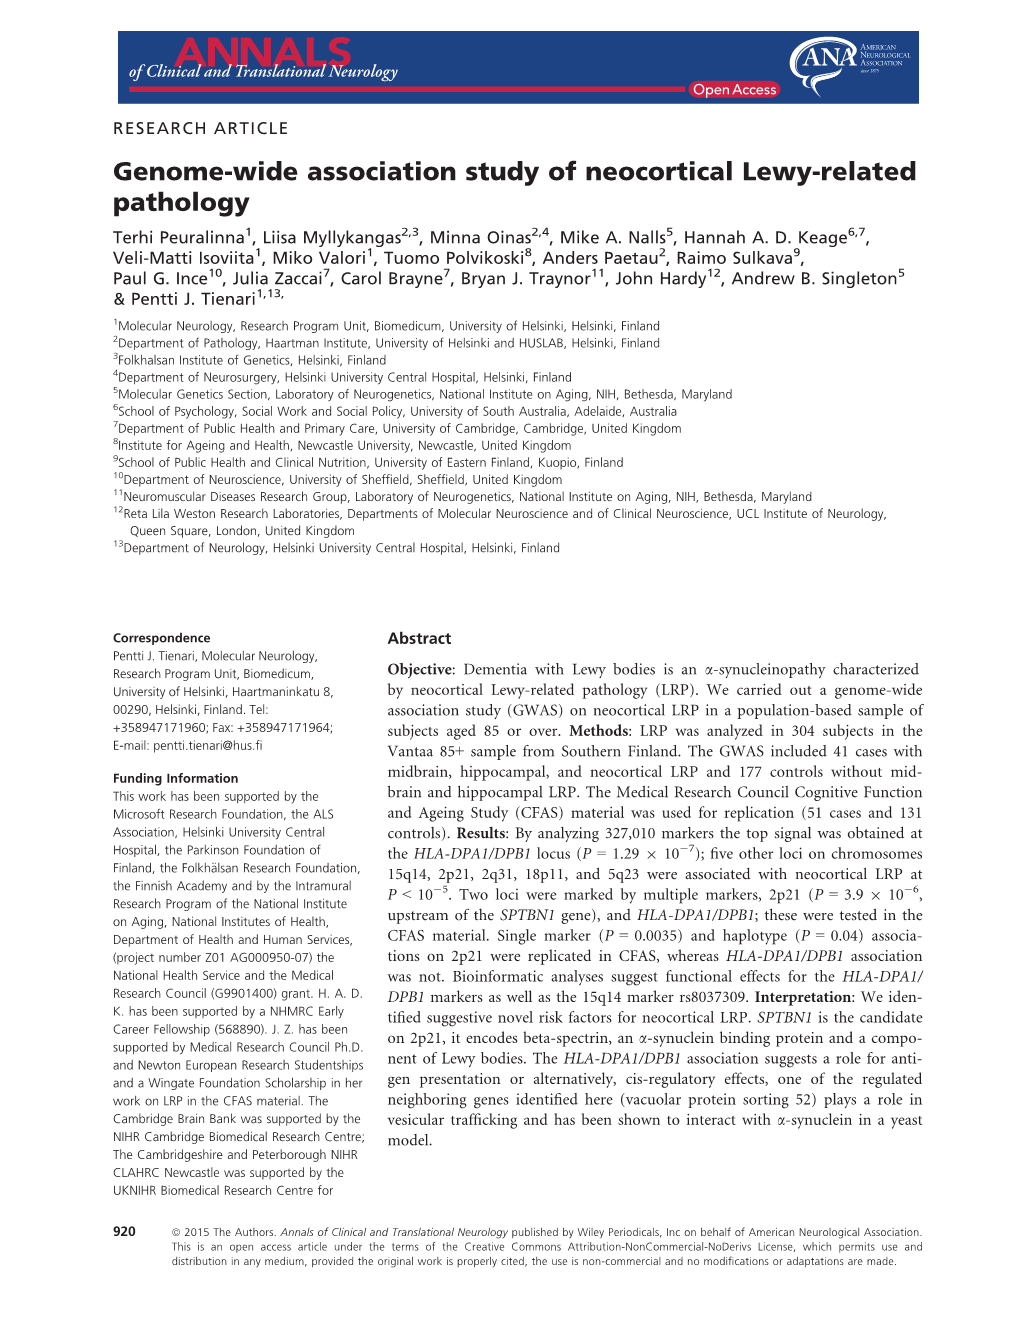 Wide Association Study of Neocortical Lewyâ